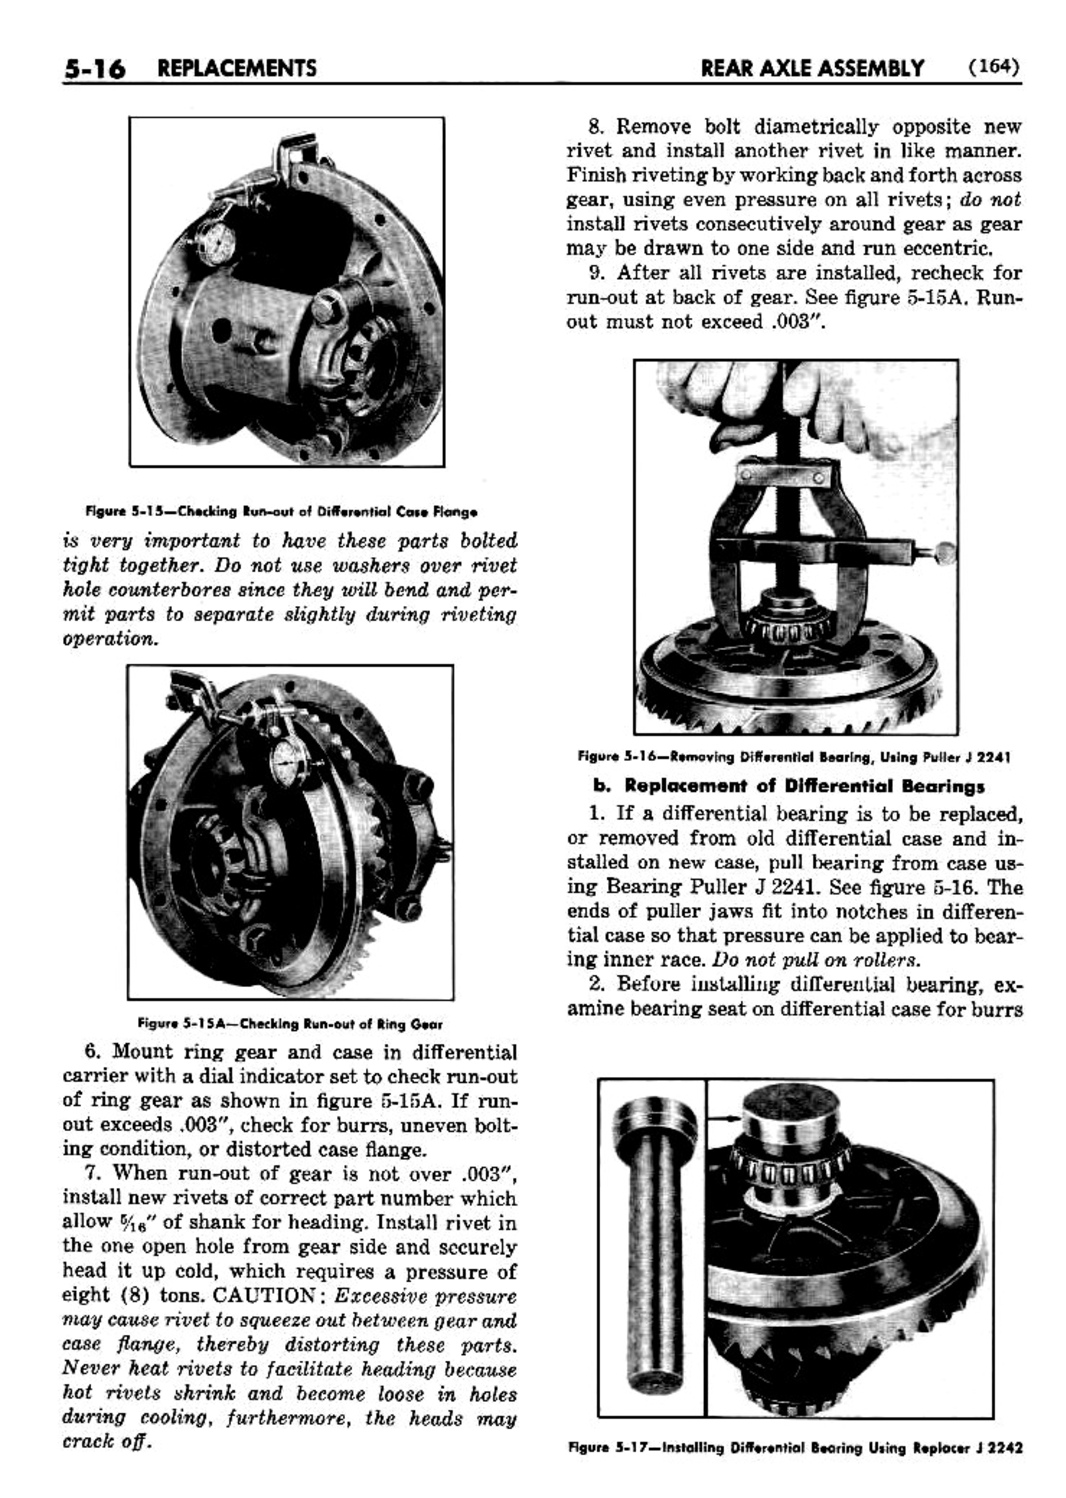 n_06 1950 Buick Shop Manual - Rear Axle-016-016.jpg